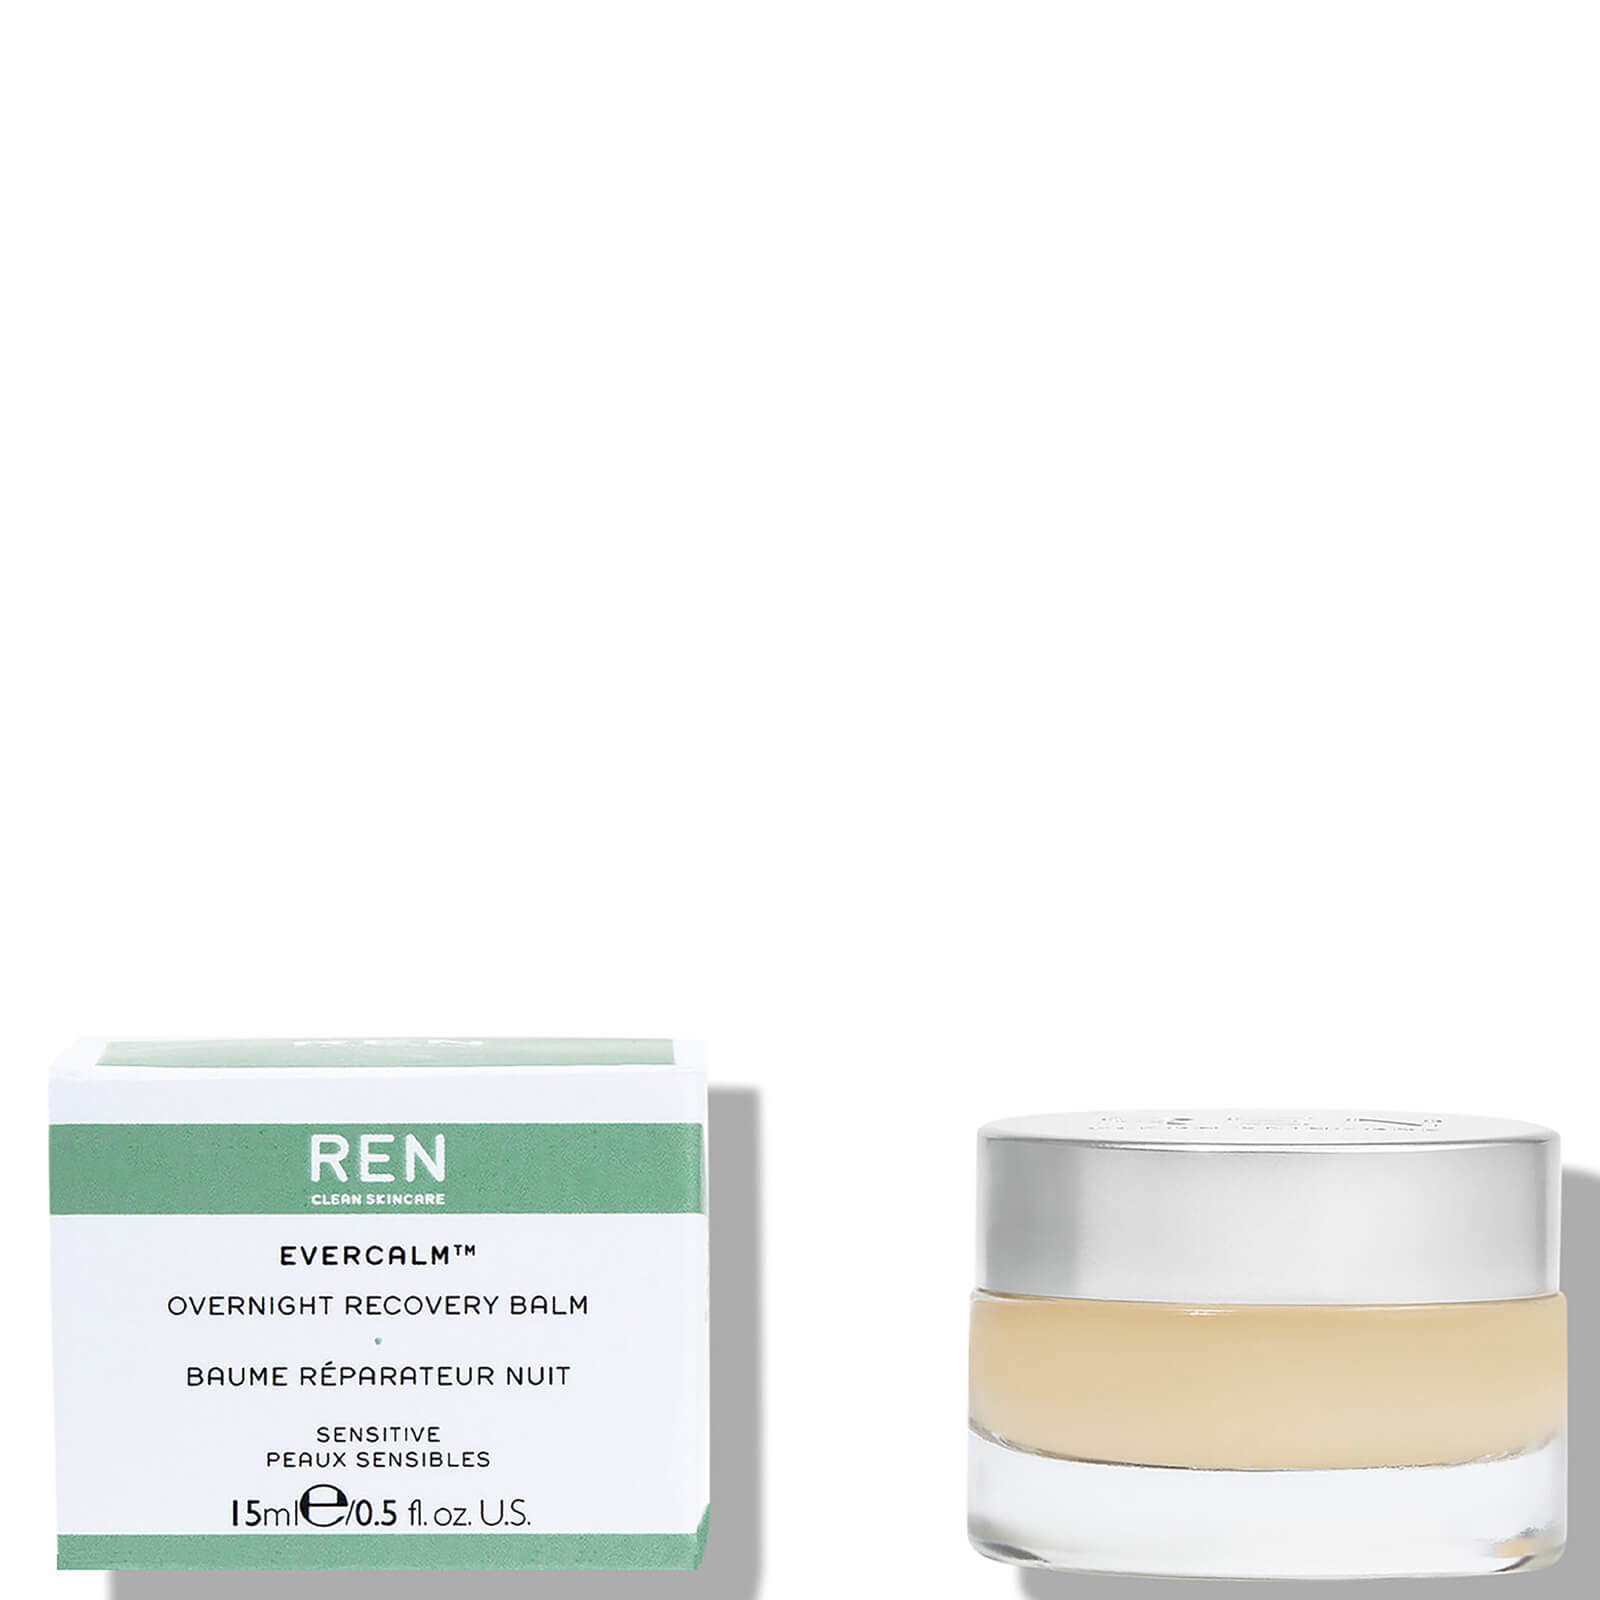 Ren Clean Skincare Evercalm Overnight Recovery Balm 15ml In Neutrals